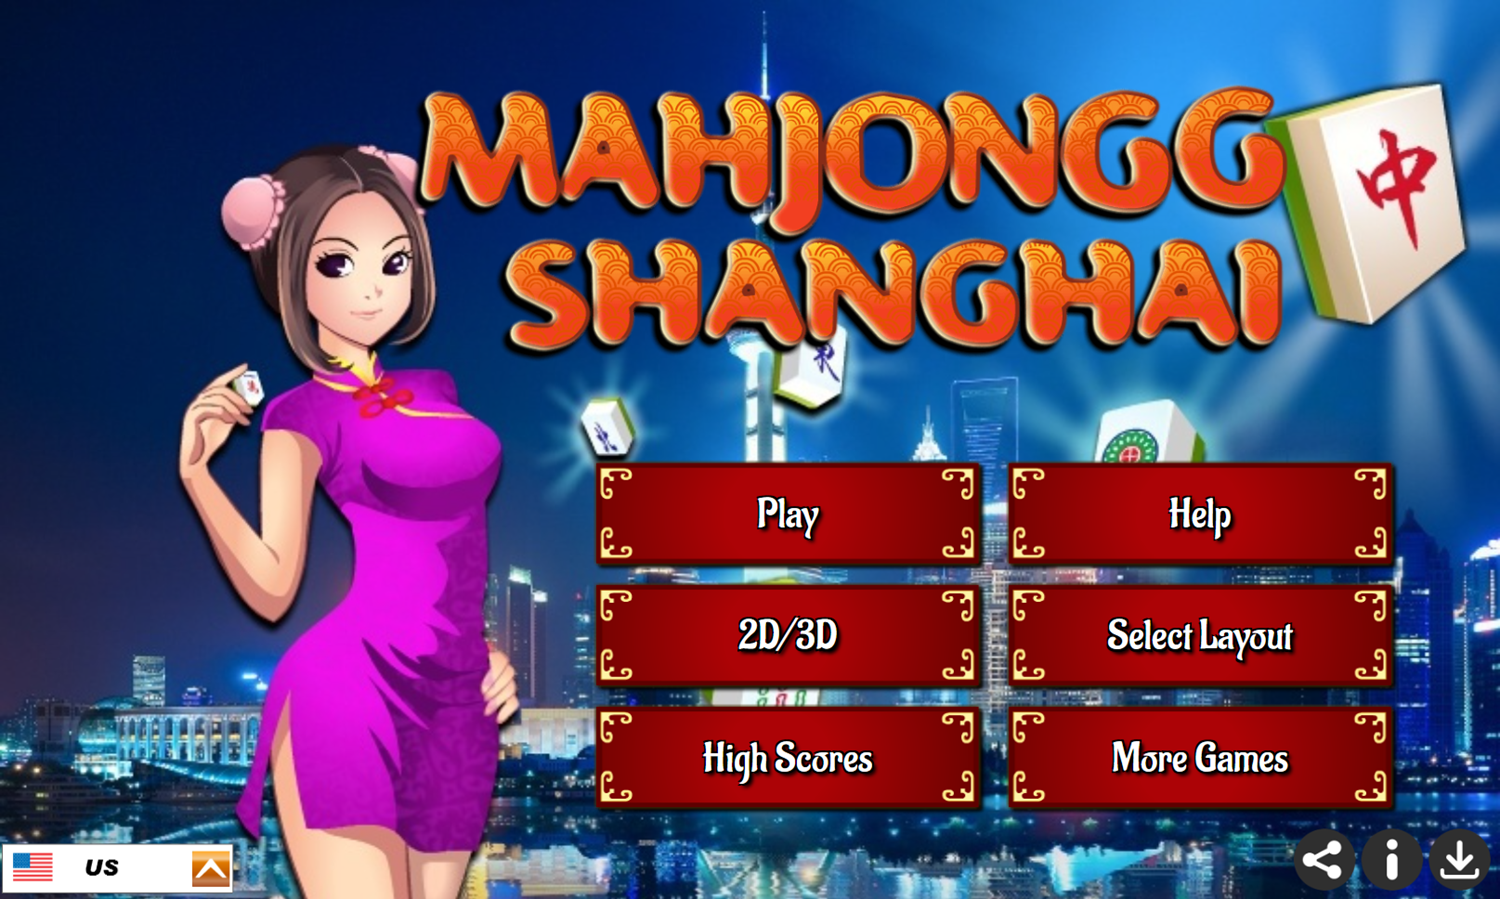 Mahjongg Shanghai Game Welcome Screen Screenshot.